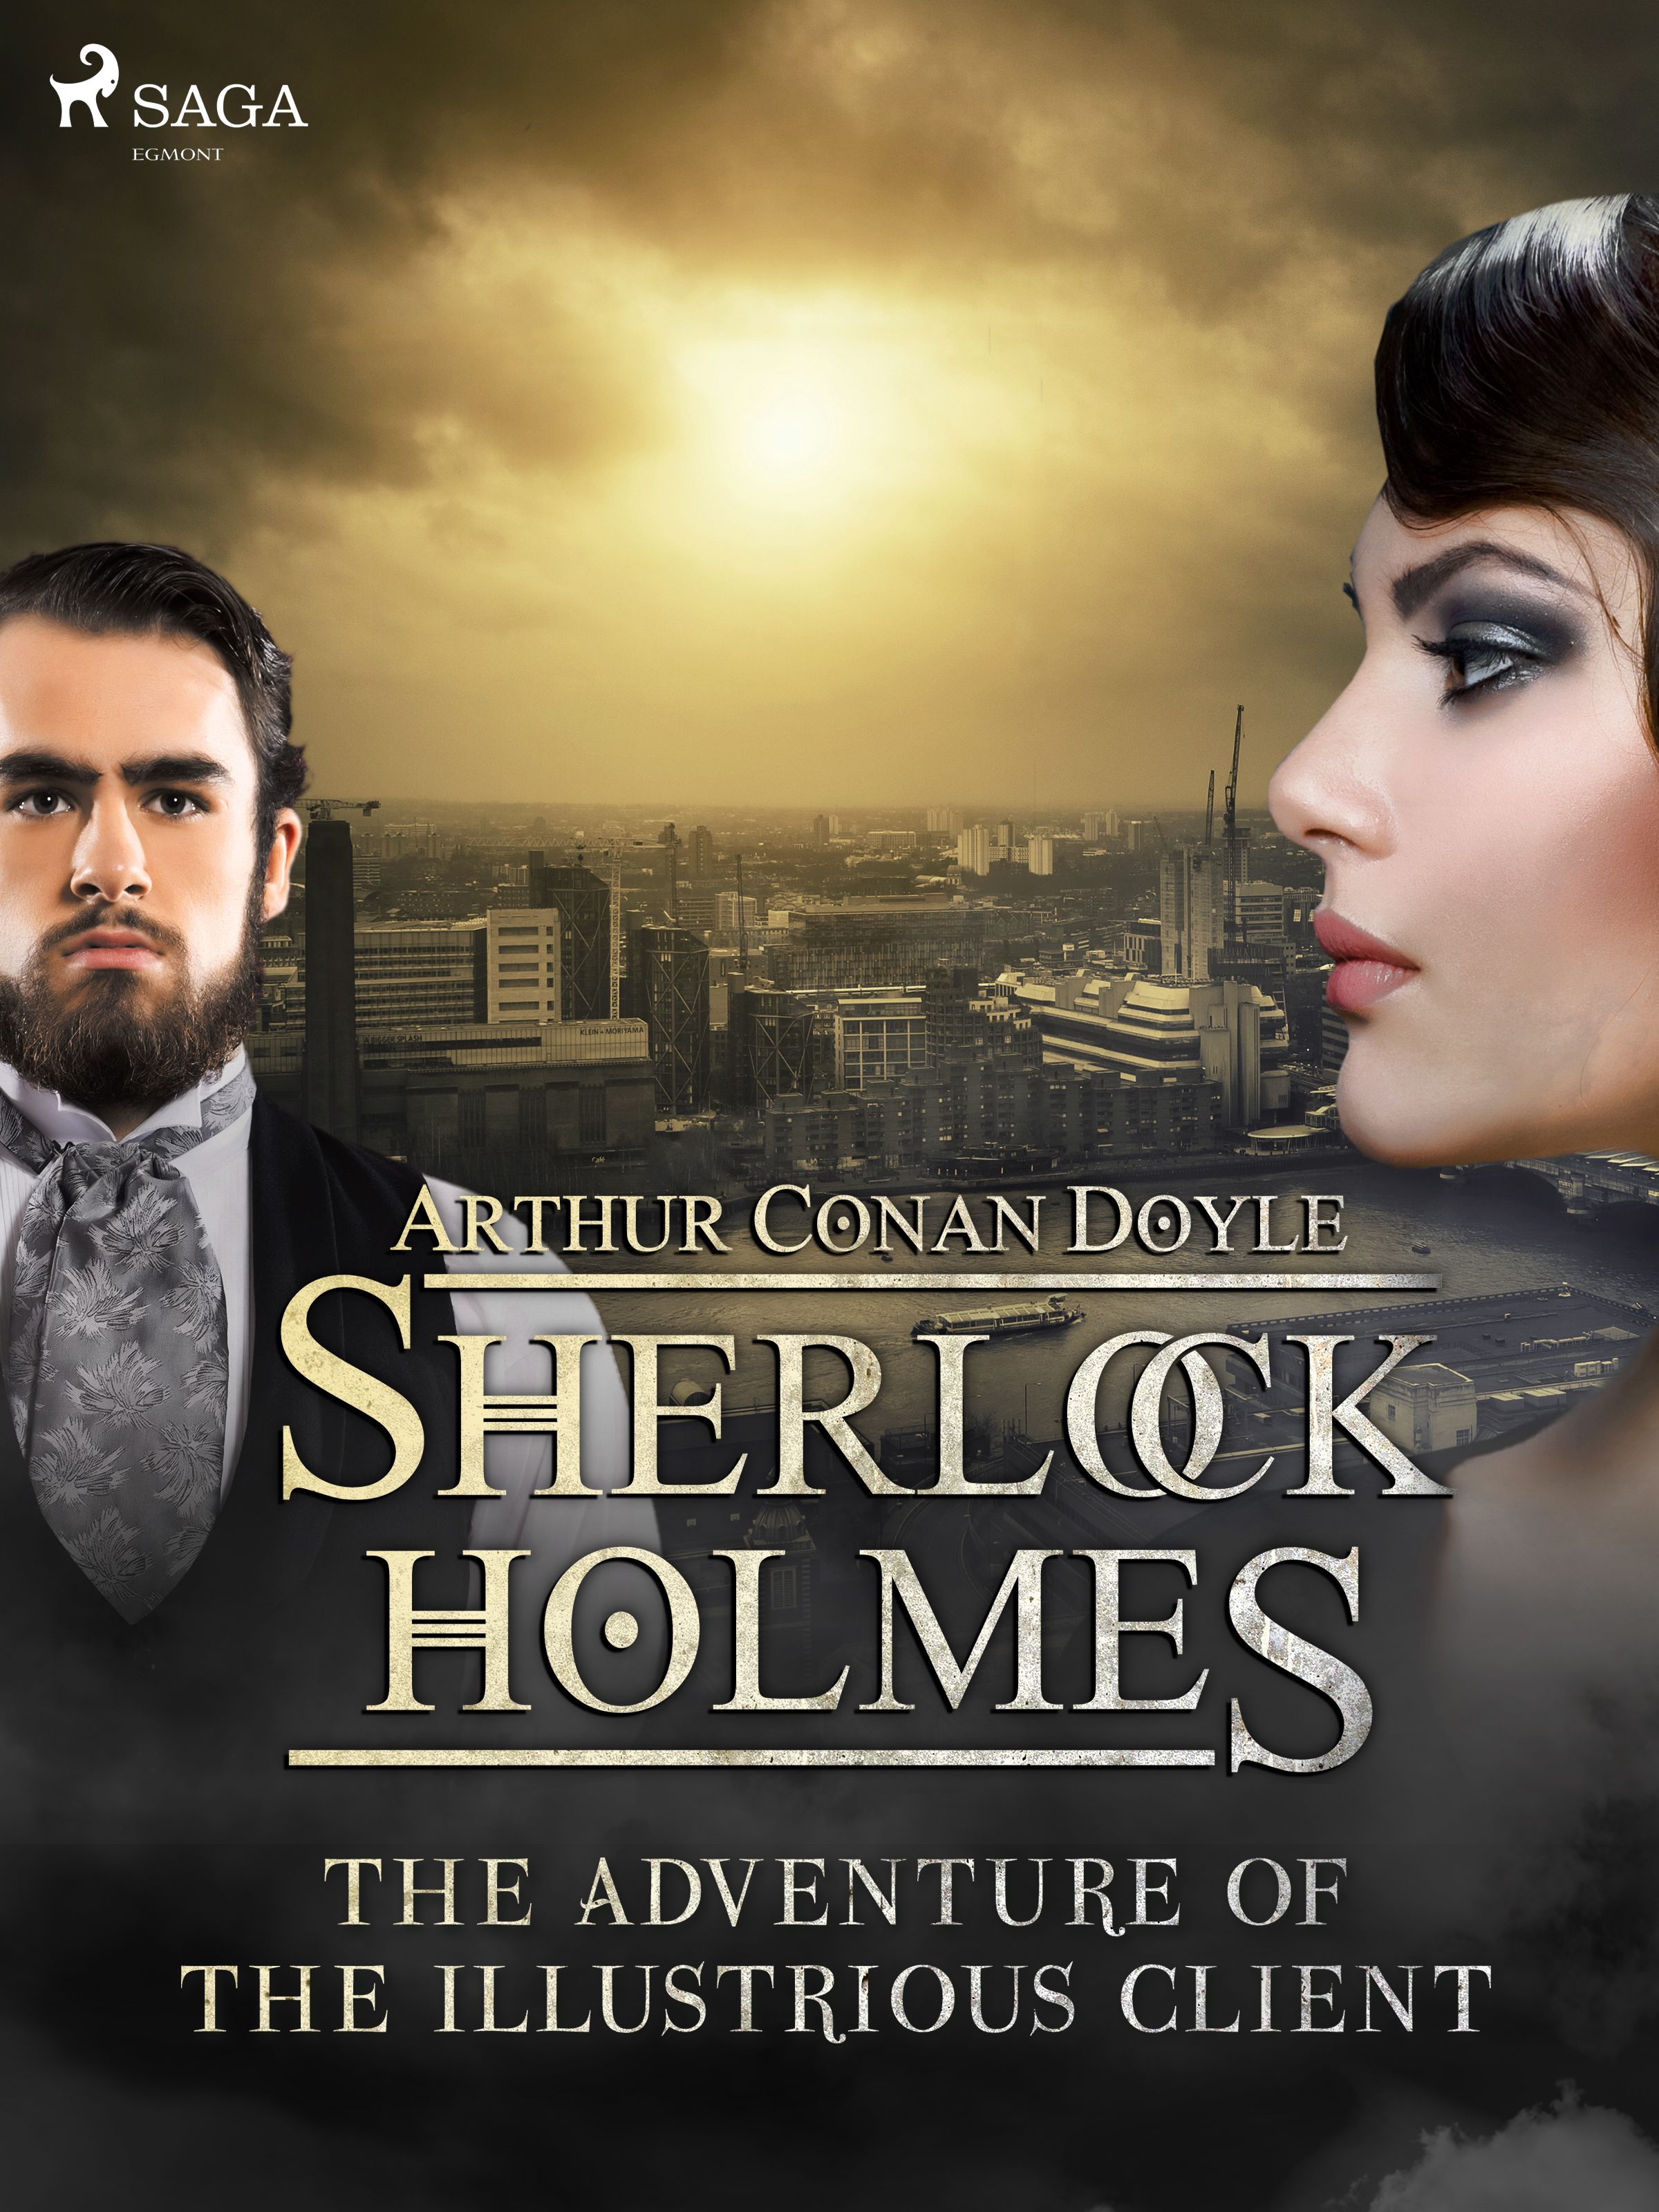 The Adventure of the Illustrious Client, eBook by Arthur Conan Doyle